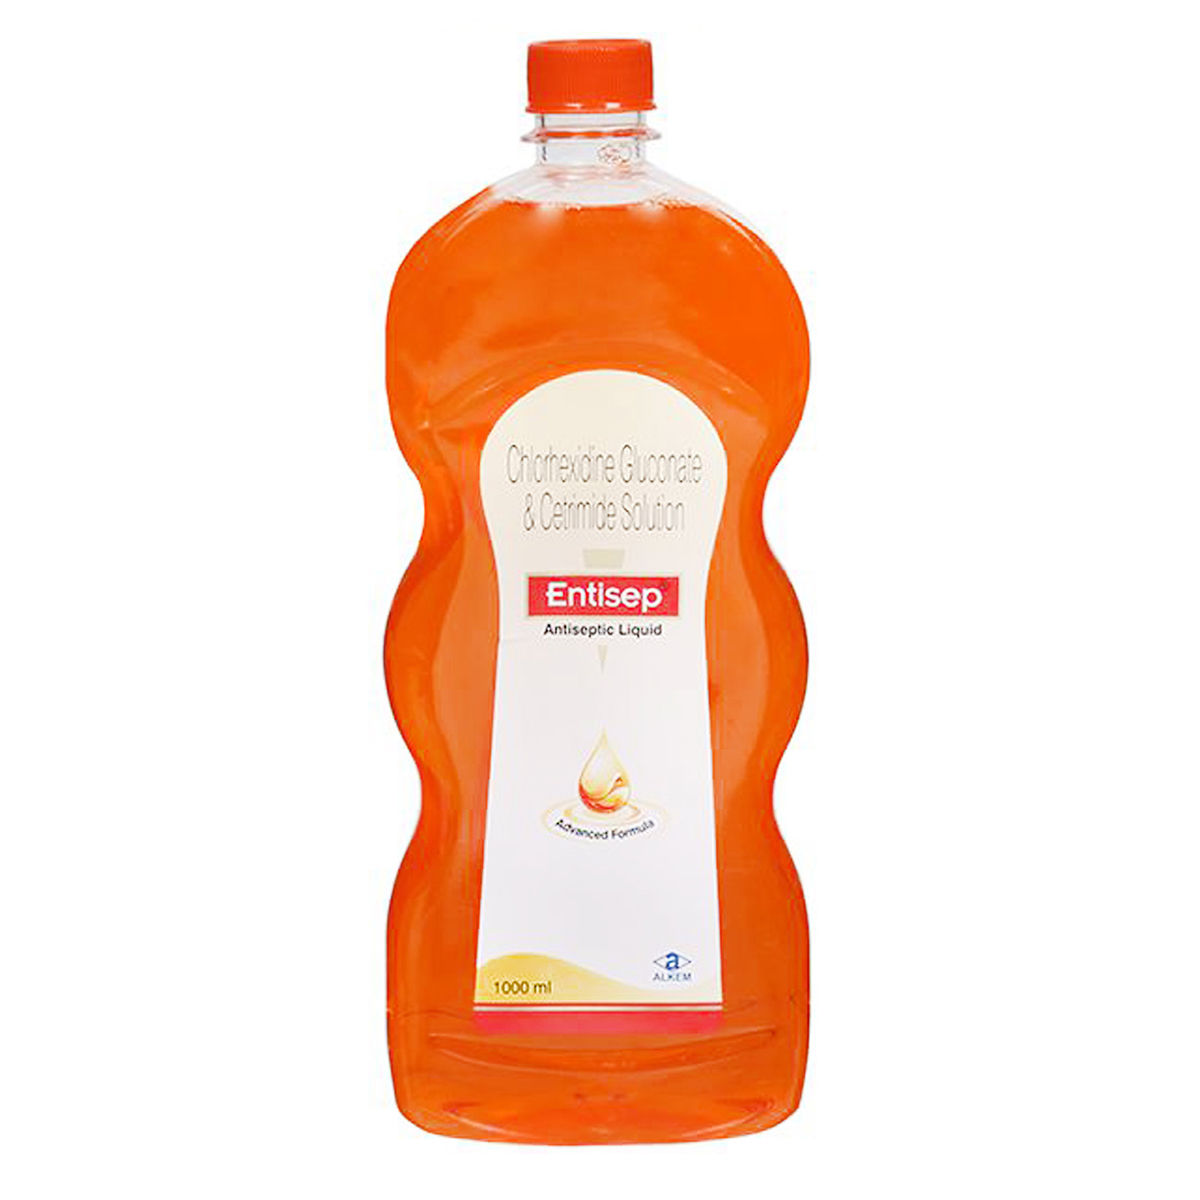 Buy Entisep Antiseptic Liquid, 1000 ml Online